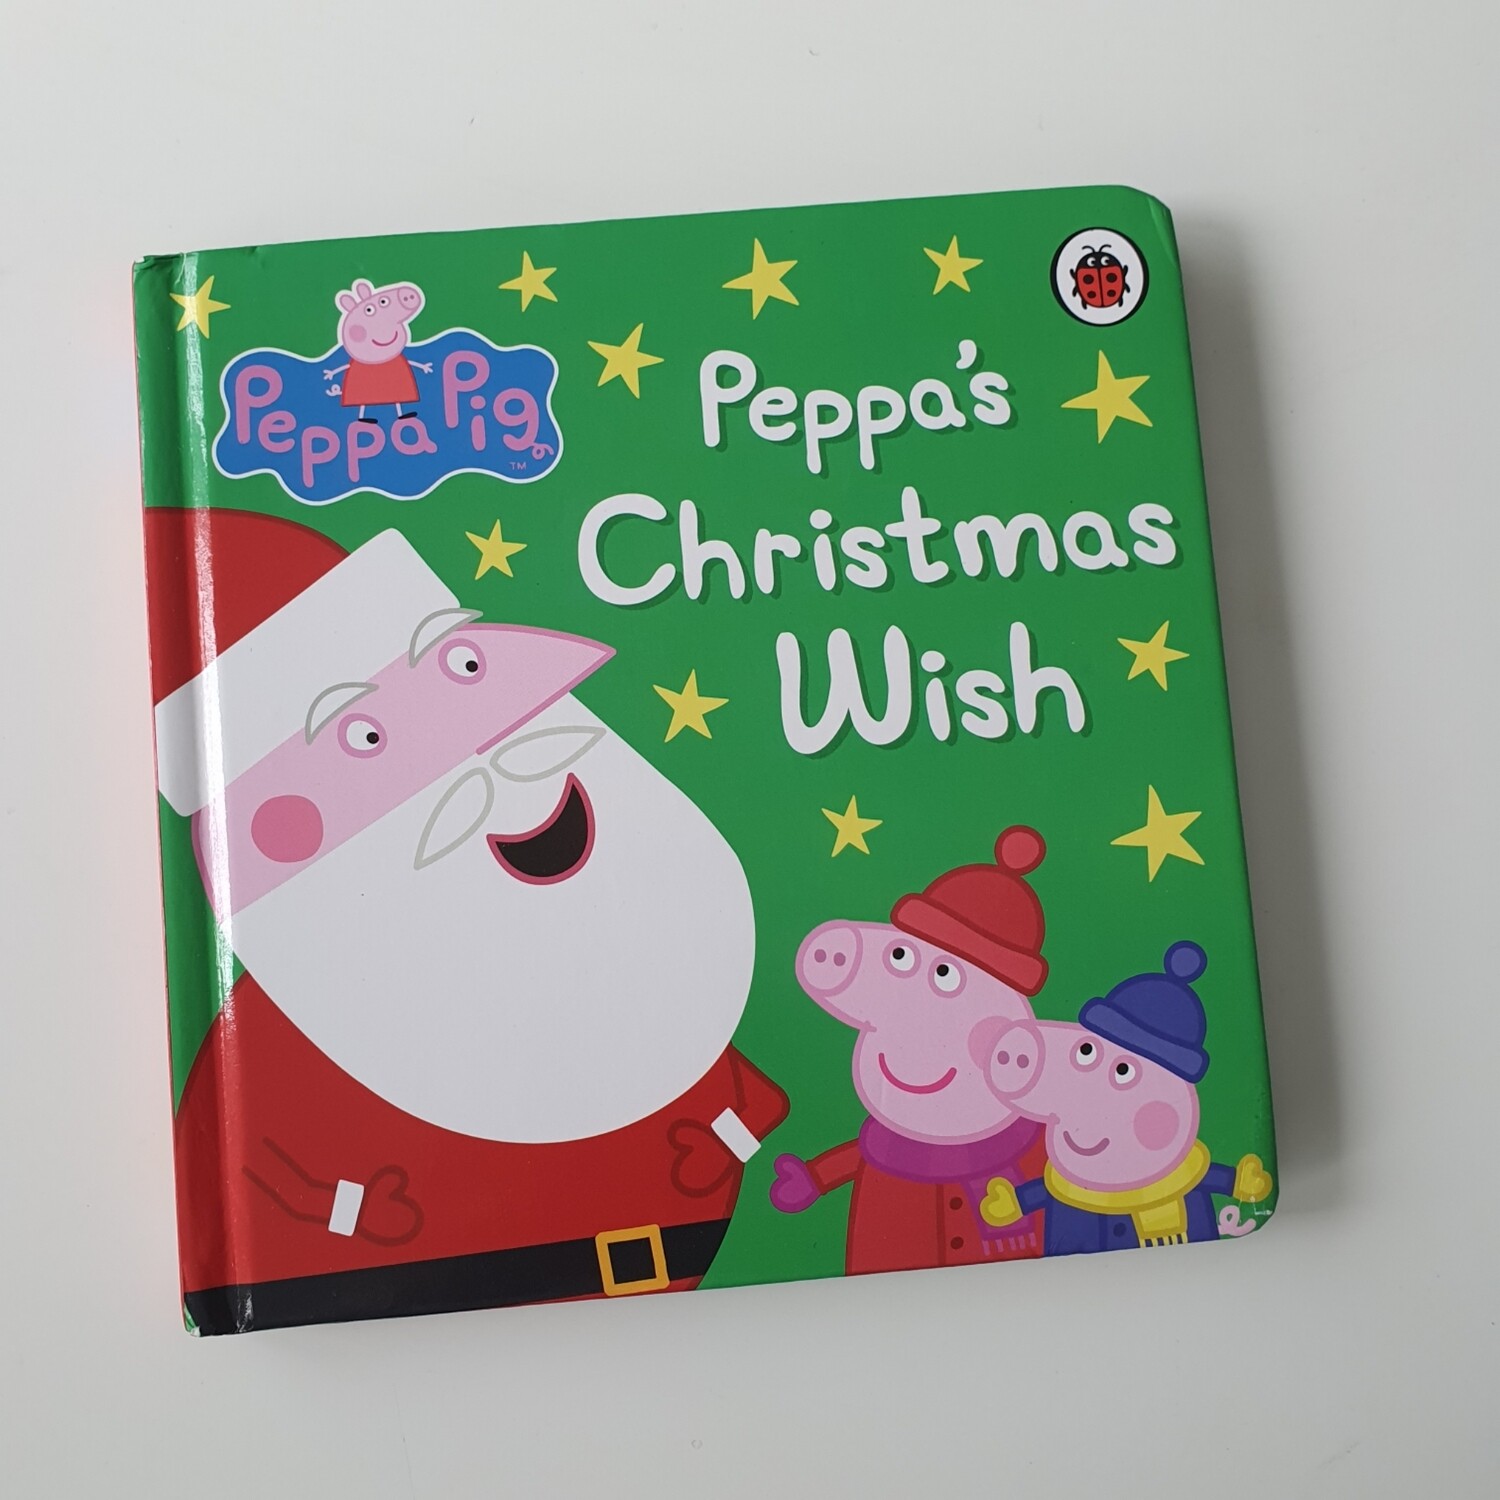 Peppa's Christmas Wish - peppa pig